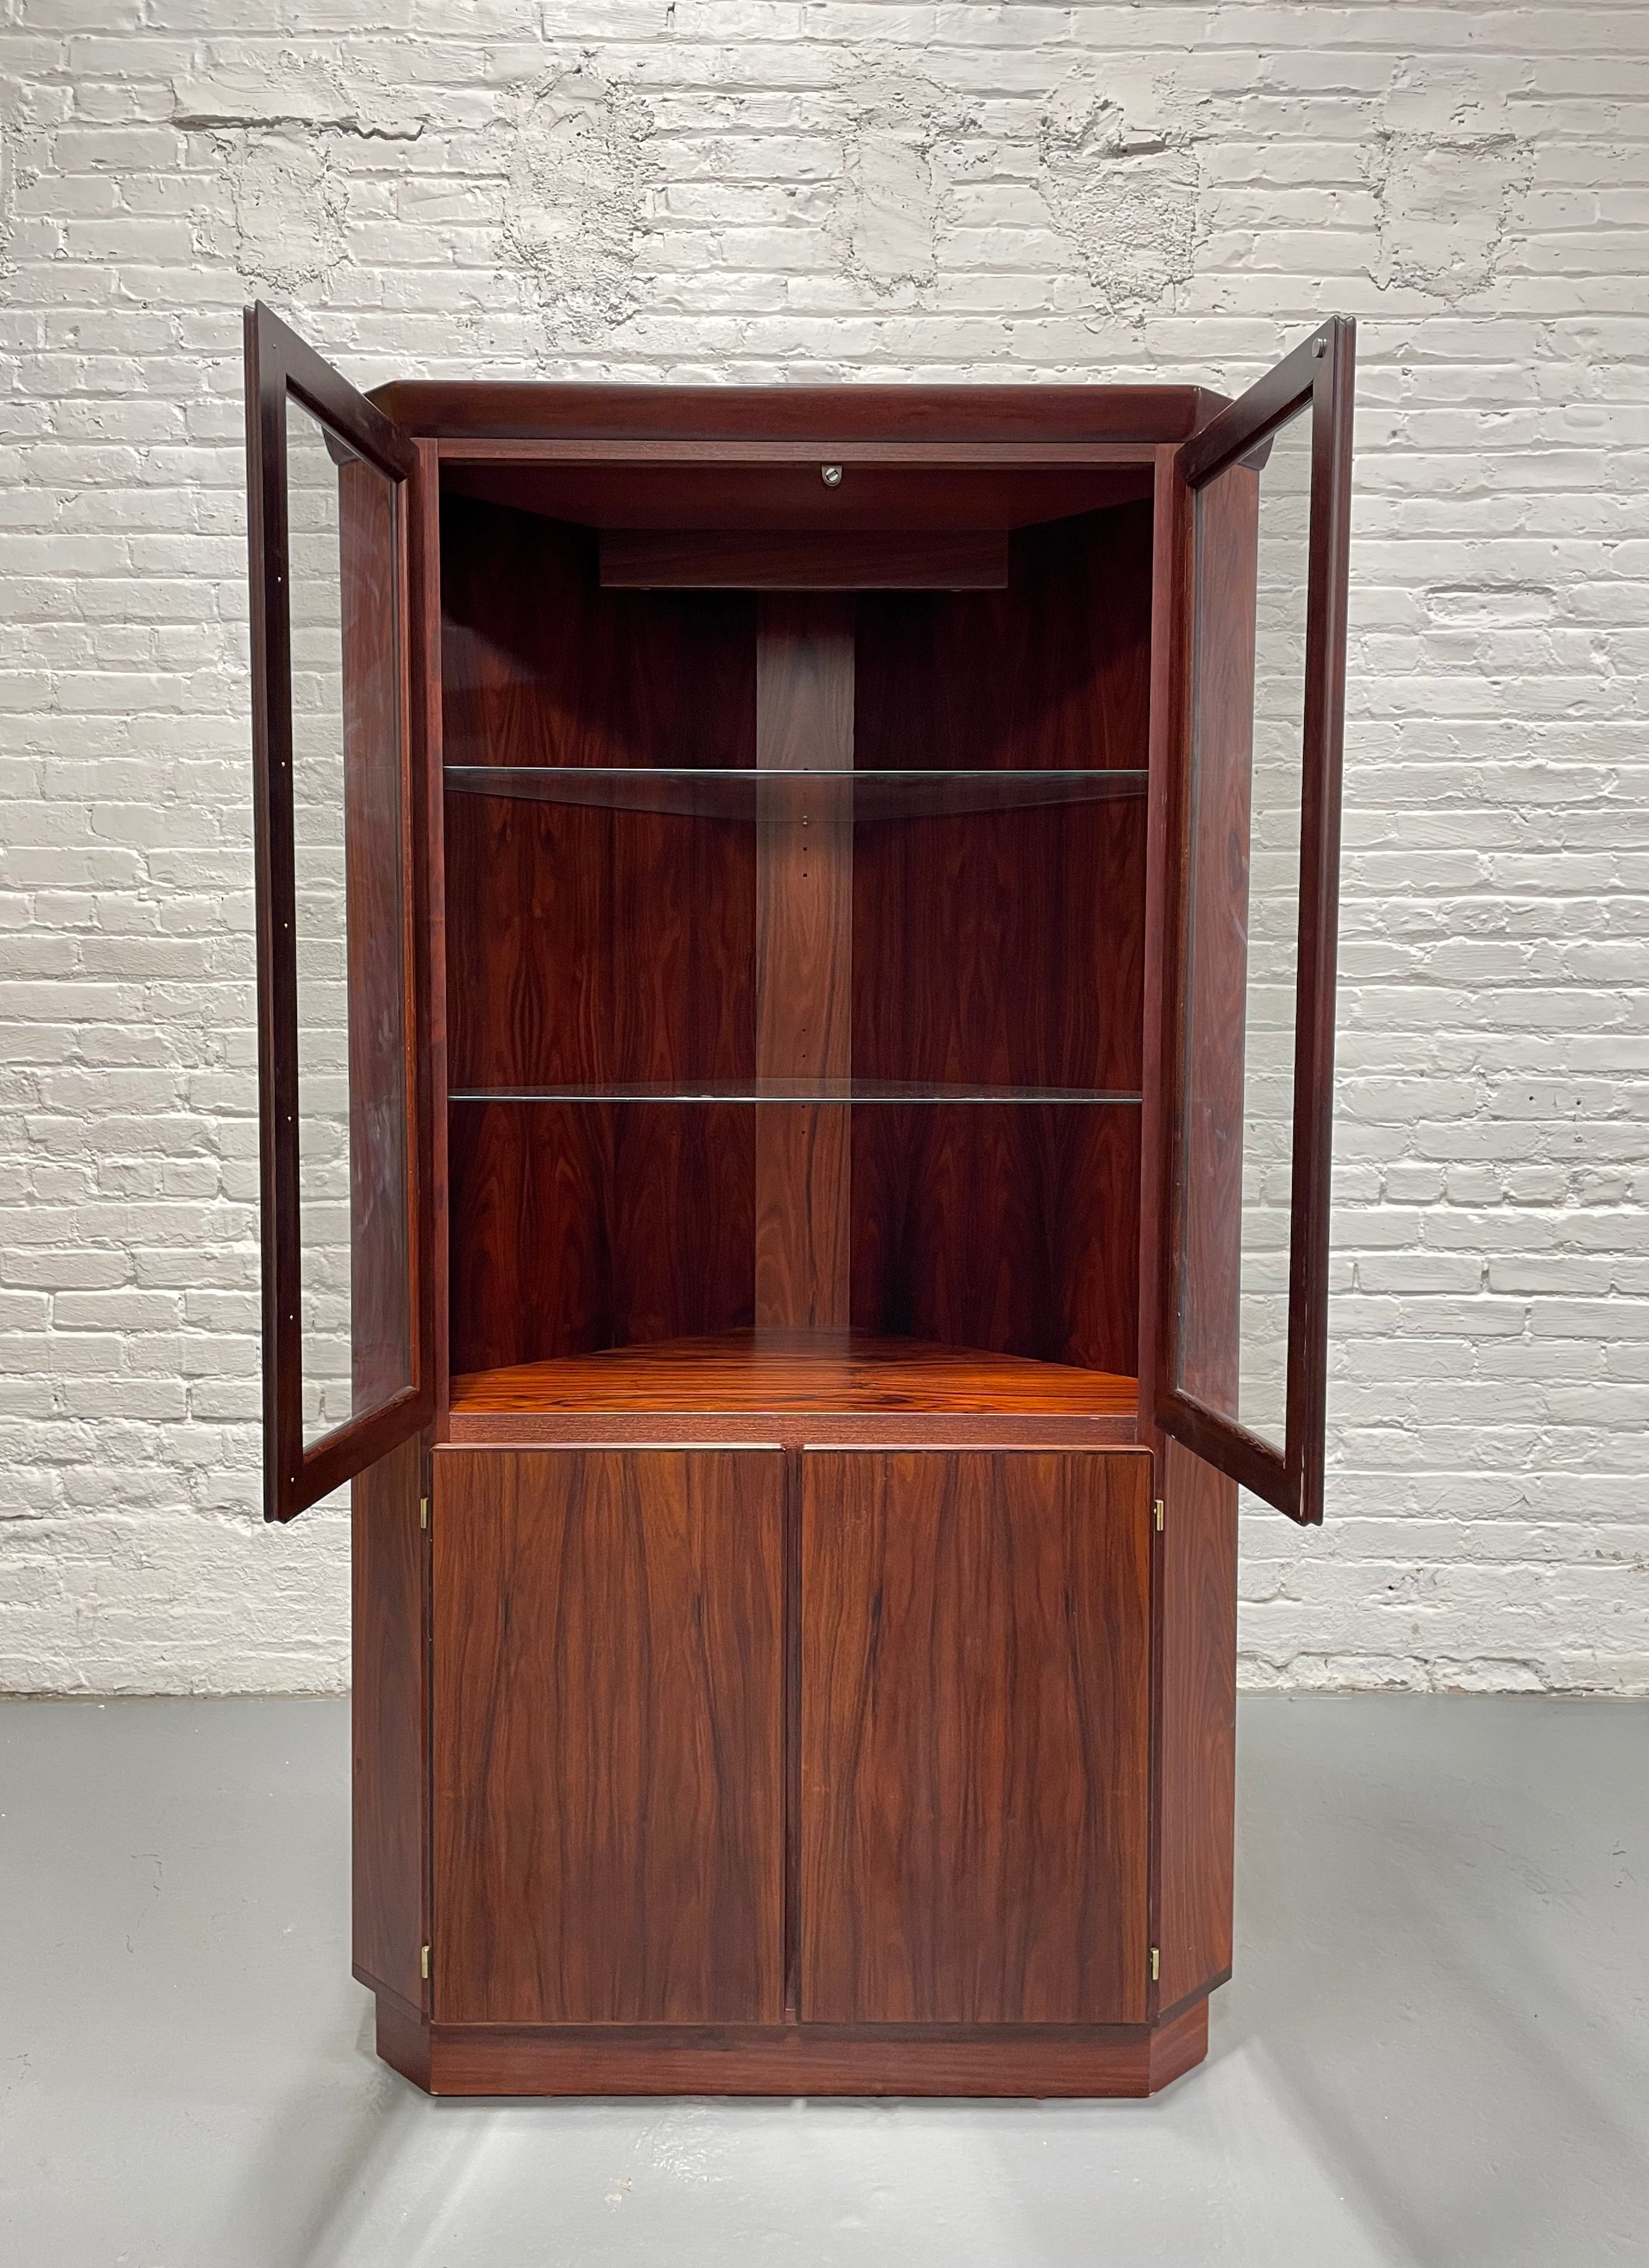 DANISH Mid Century Modern TEAK CORNER Bookcase / China Cabinet by Skovby, Made in Denmark